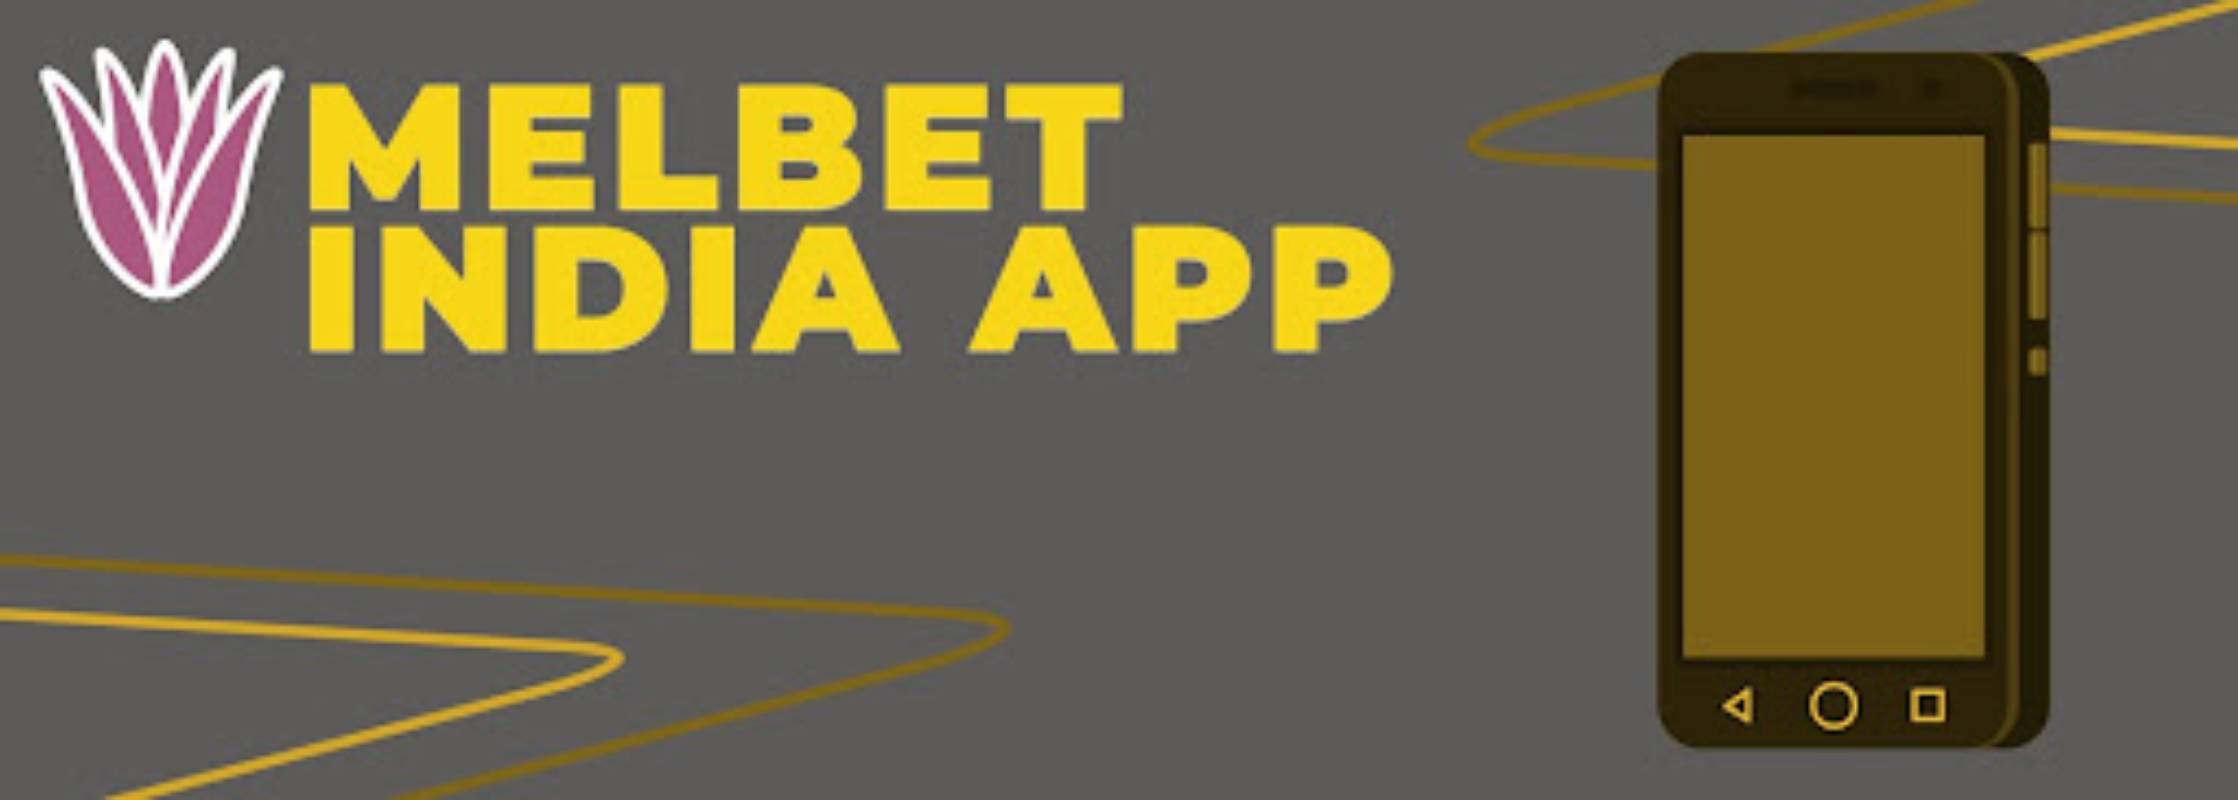 Melbet India App 